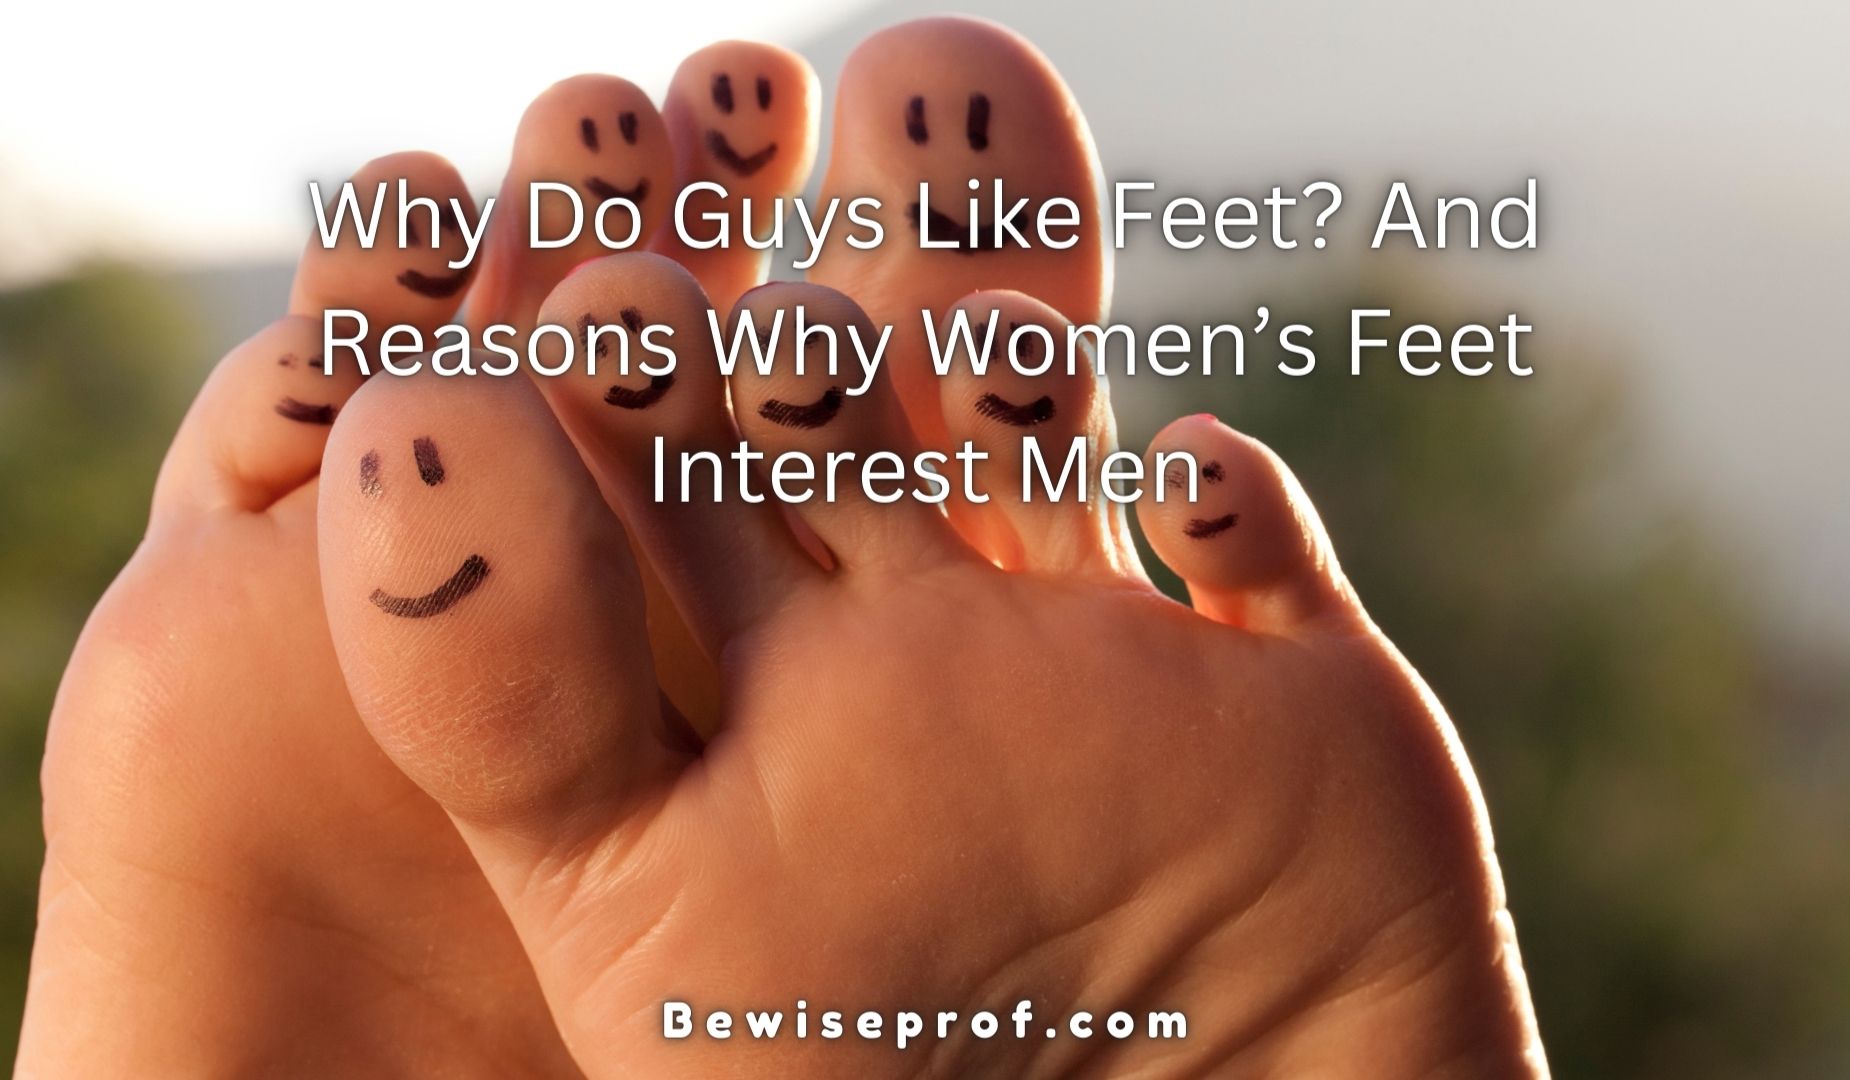 Why Do Guys Like Feet? And Reasons Why Women’s Feet Interest Men